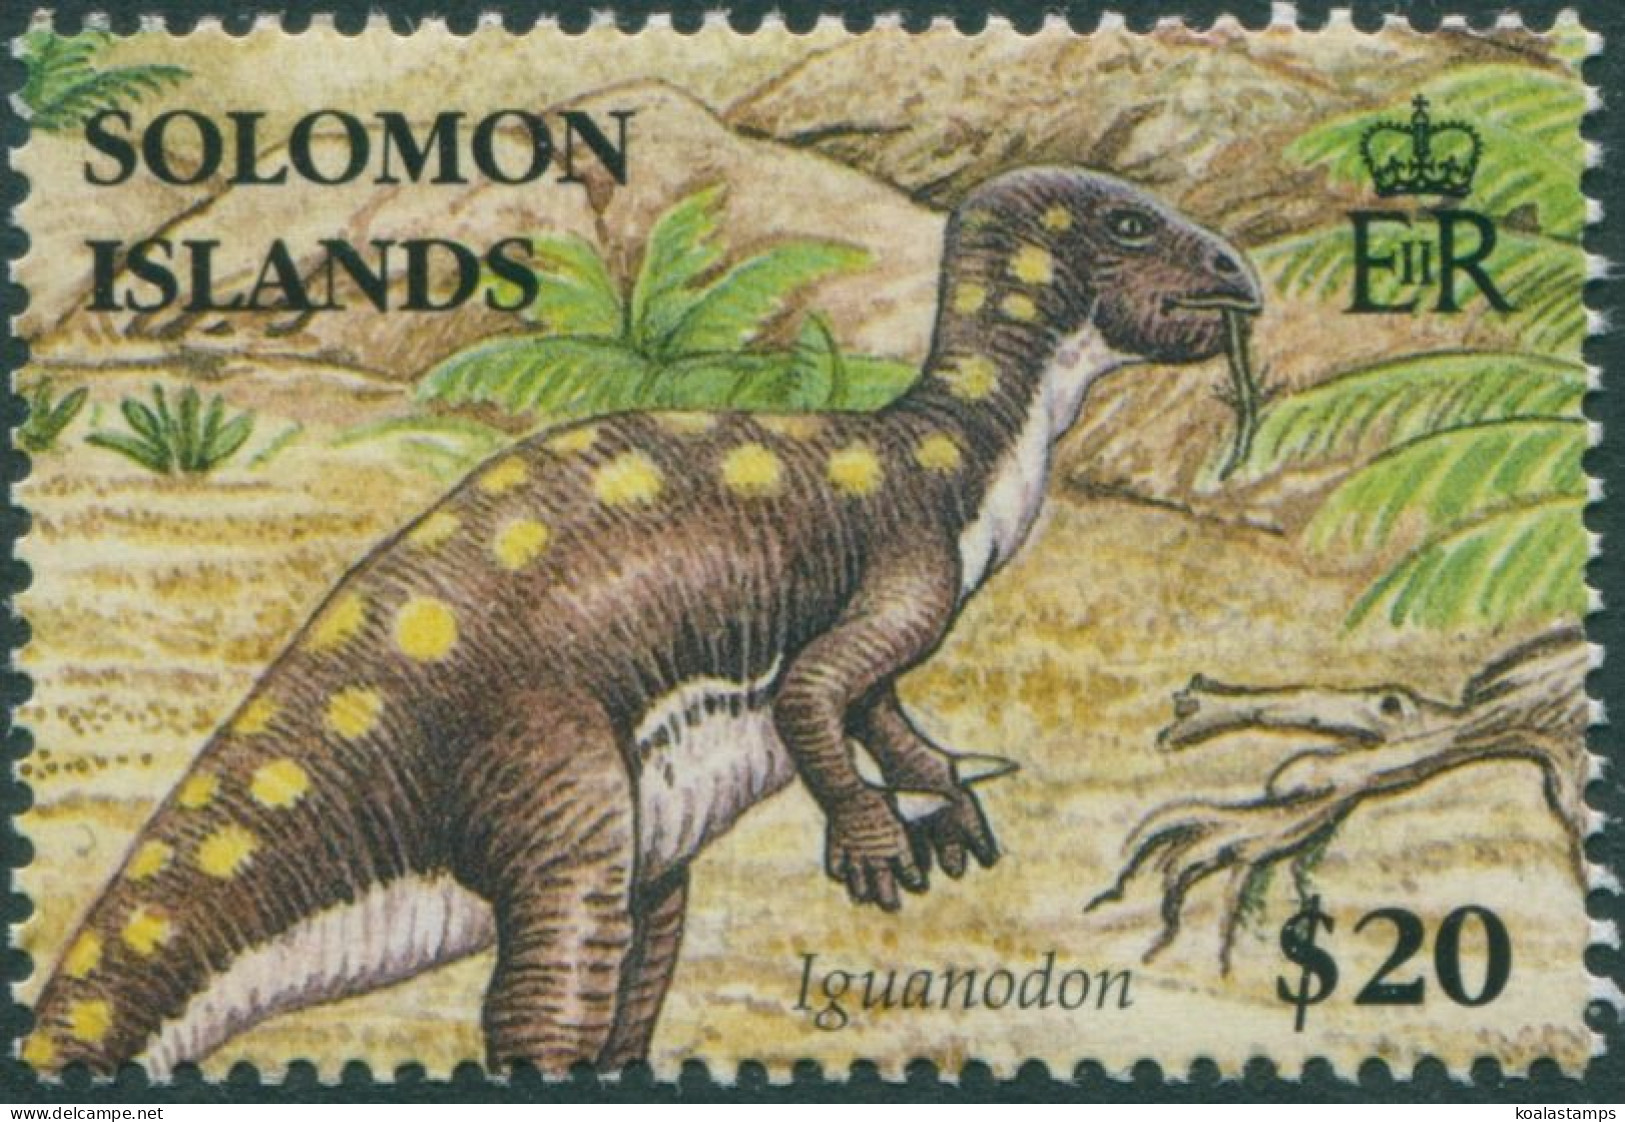 Solomon Islands 2006 SG1201 $20 Dinosaur MNH - Solomon Islands (1978-...)